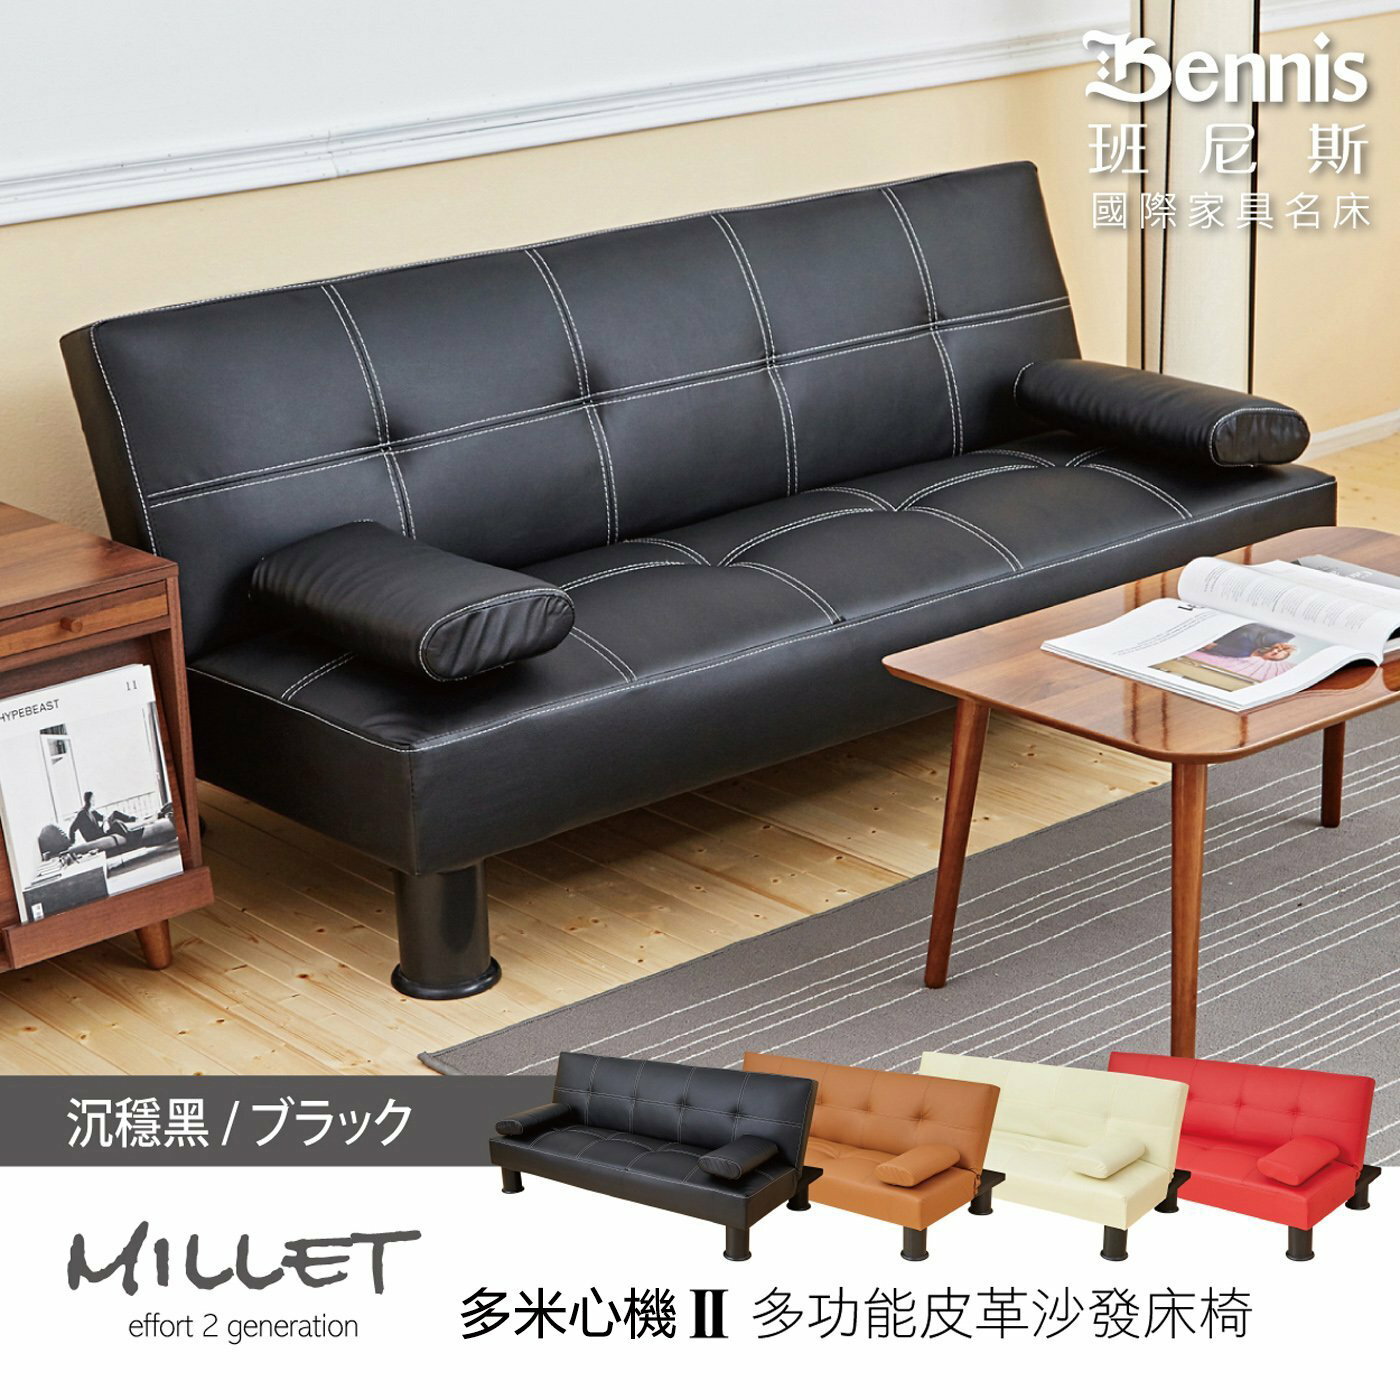 Millet 多米心機 II代 皮革多人座優質沙發床(升級加贈兩個抱枕)/熱銷經典/班尼斯國際名床